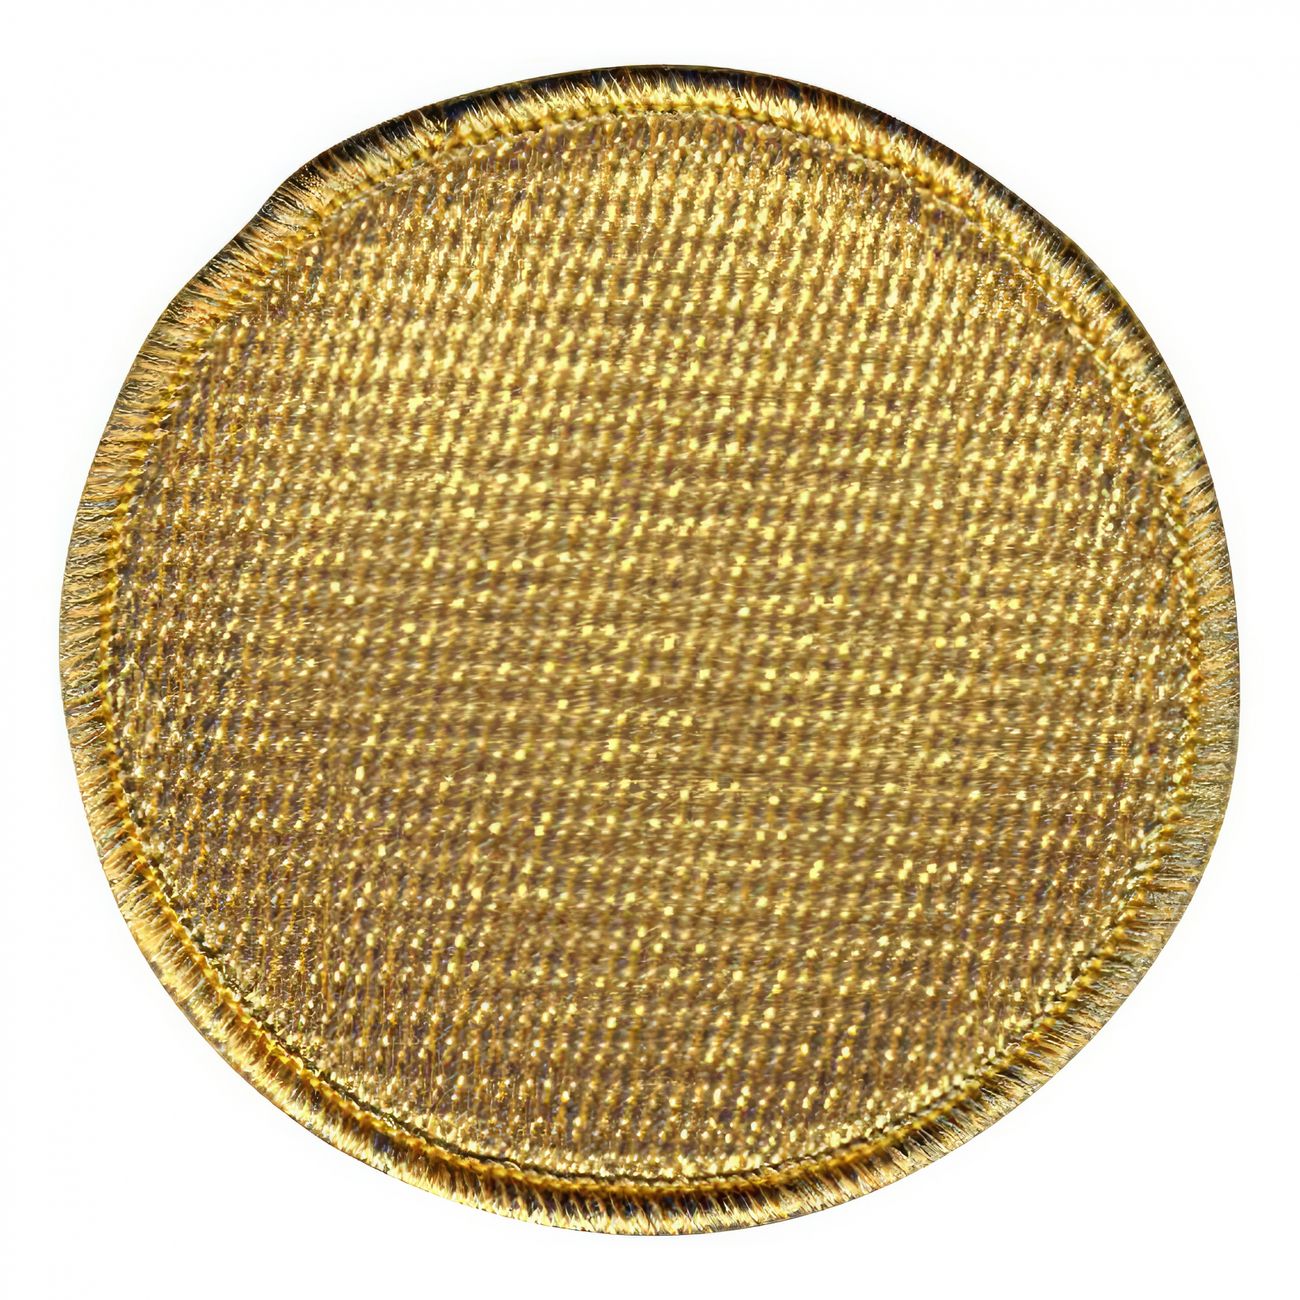 tygmarke-guld-medalj-93843-1